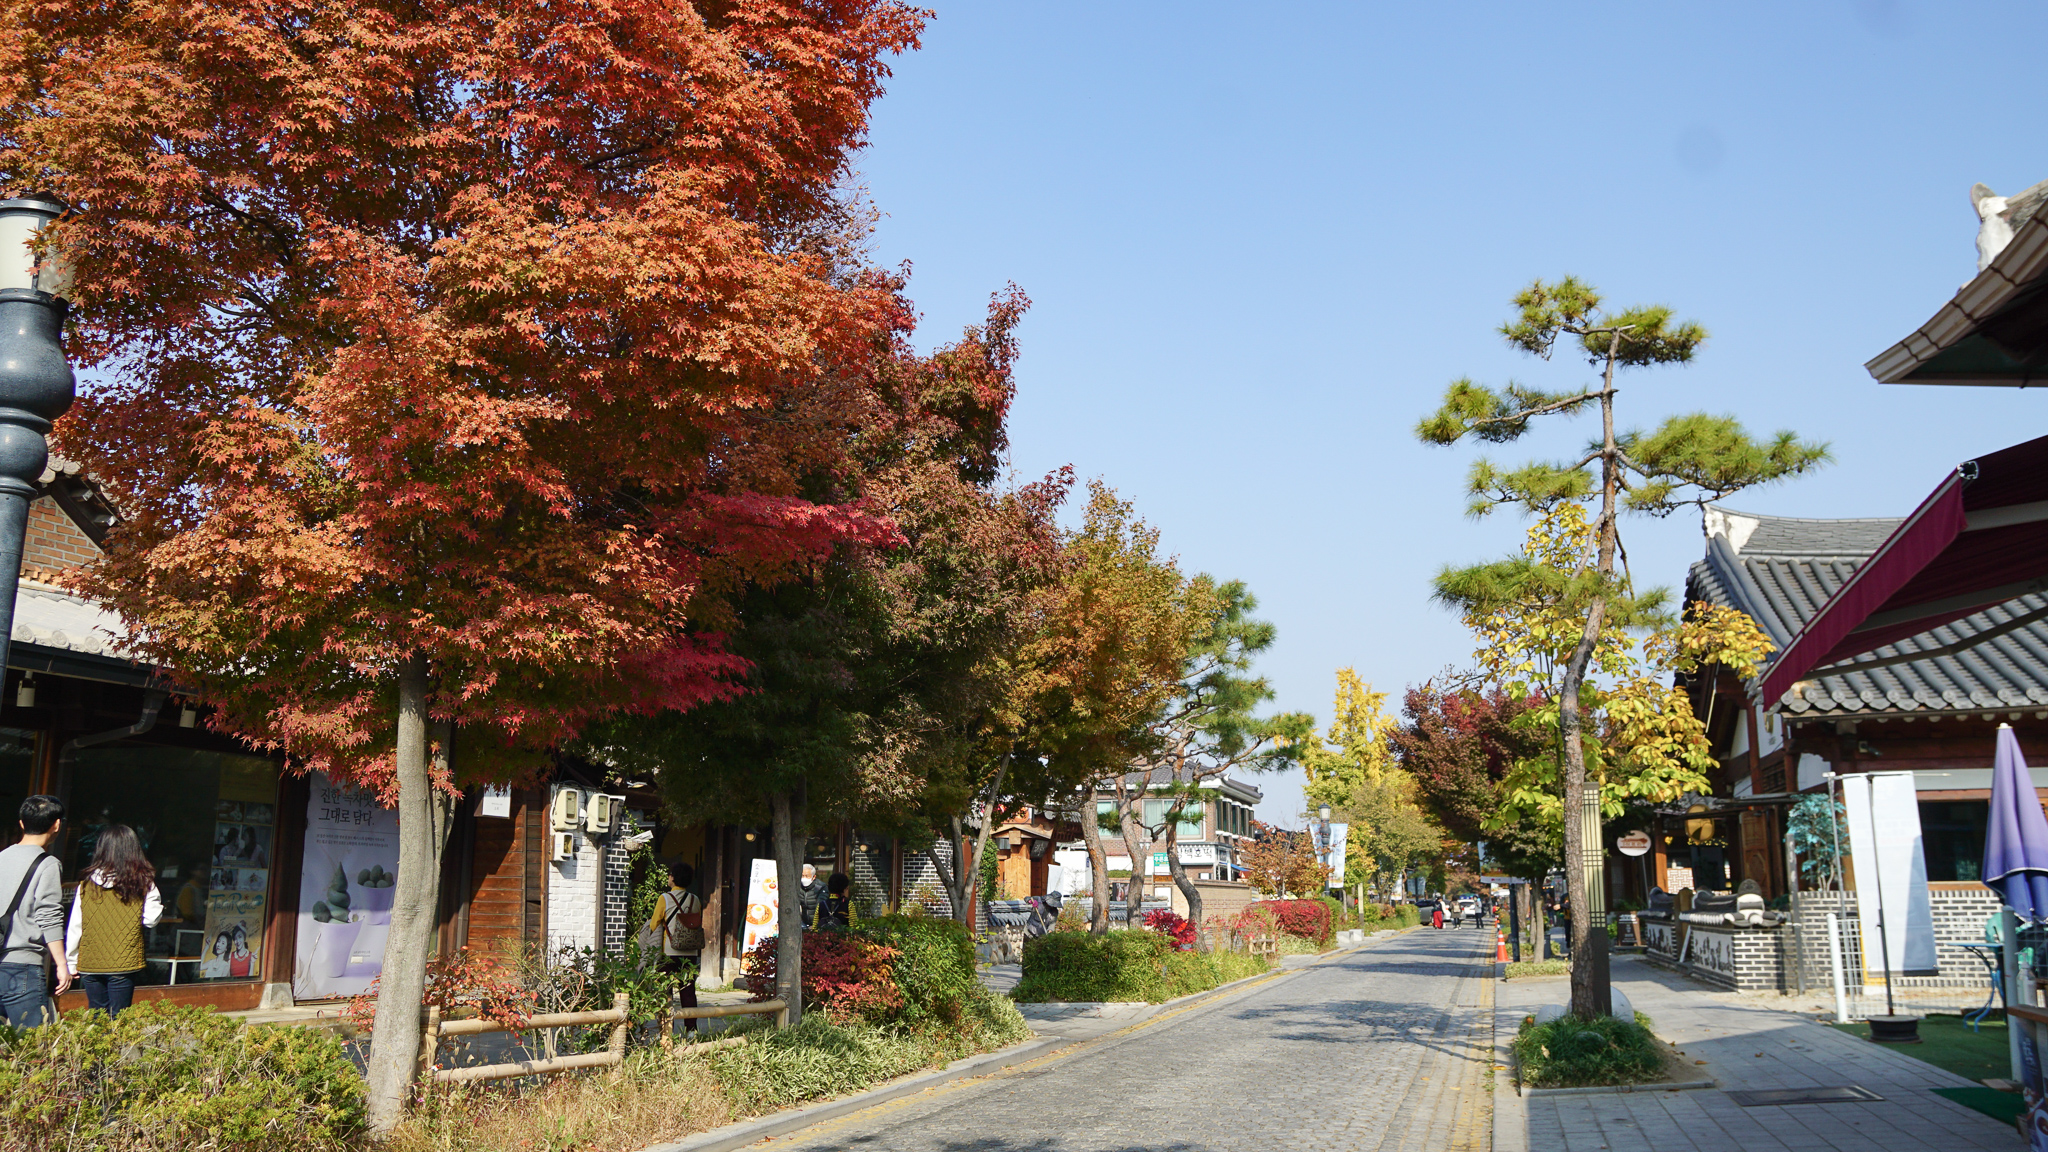 Visiting Jeonju Hanok Village with autumn trees